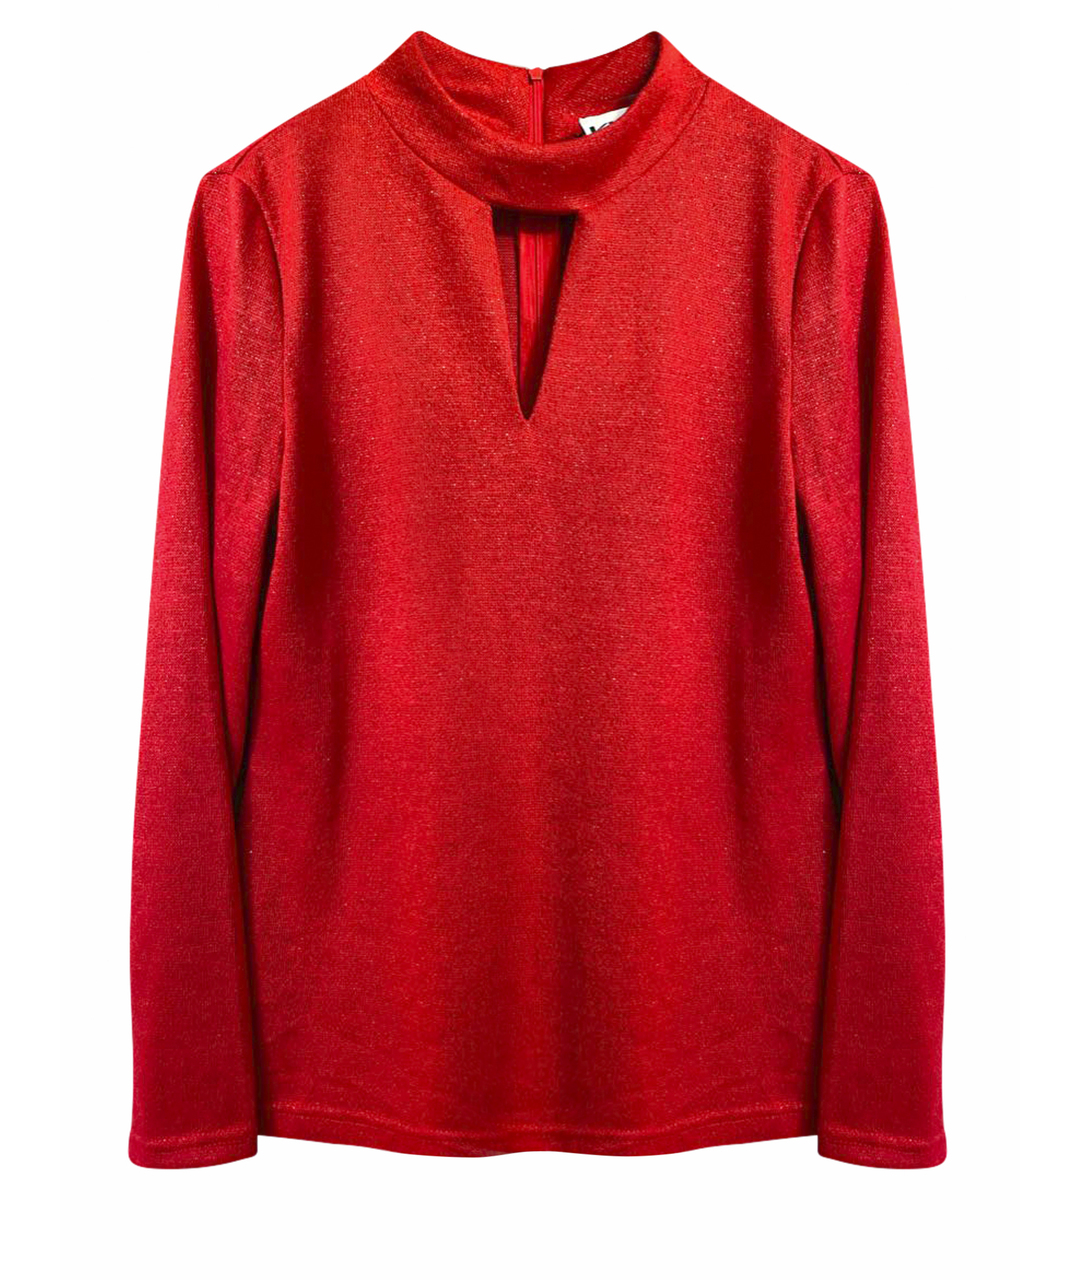 KARL LAGERFELD Красный шерстяной джемпер / свитер, фото 1